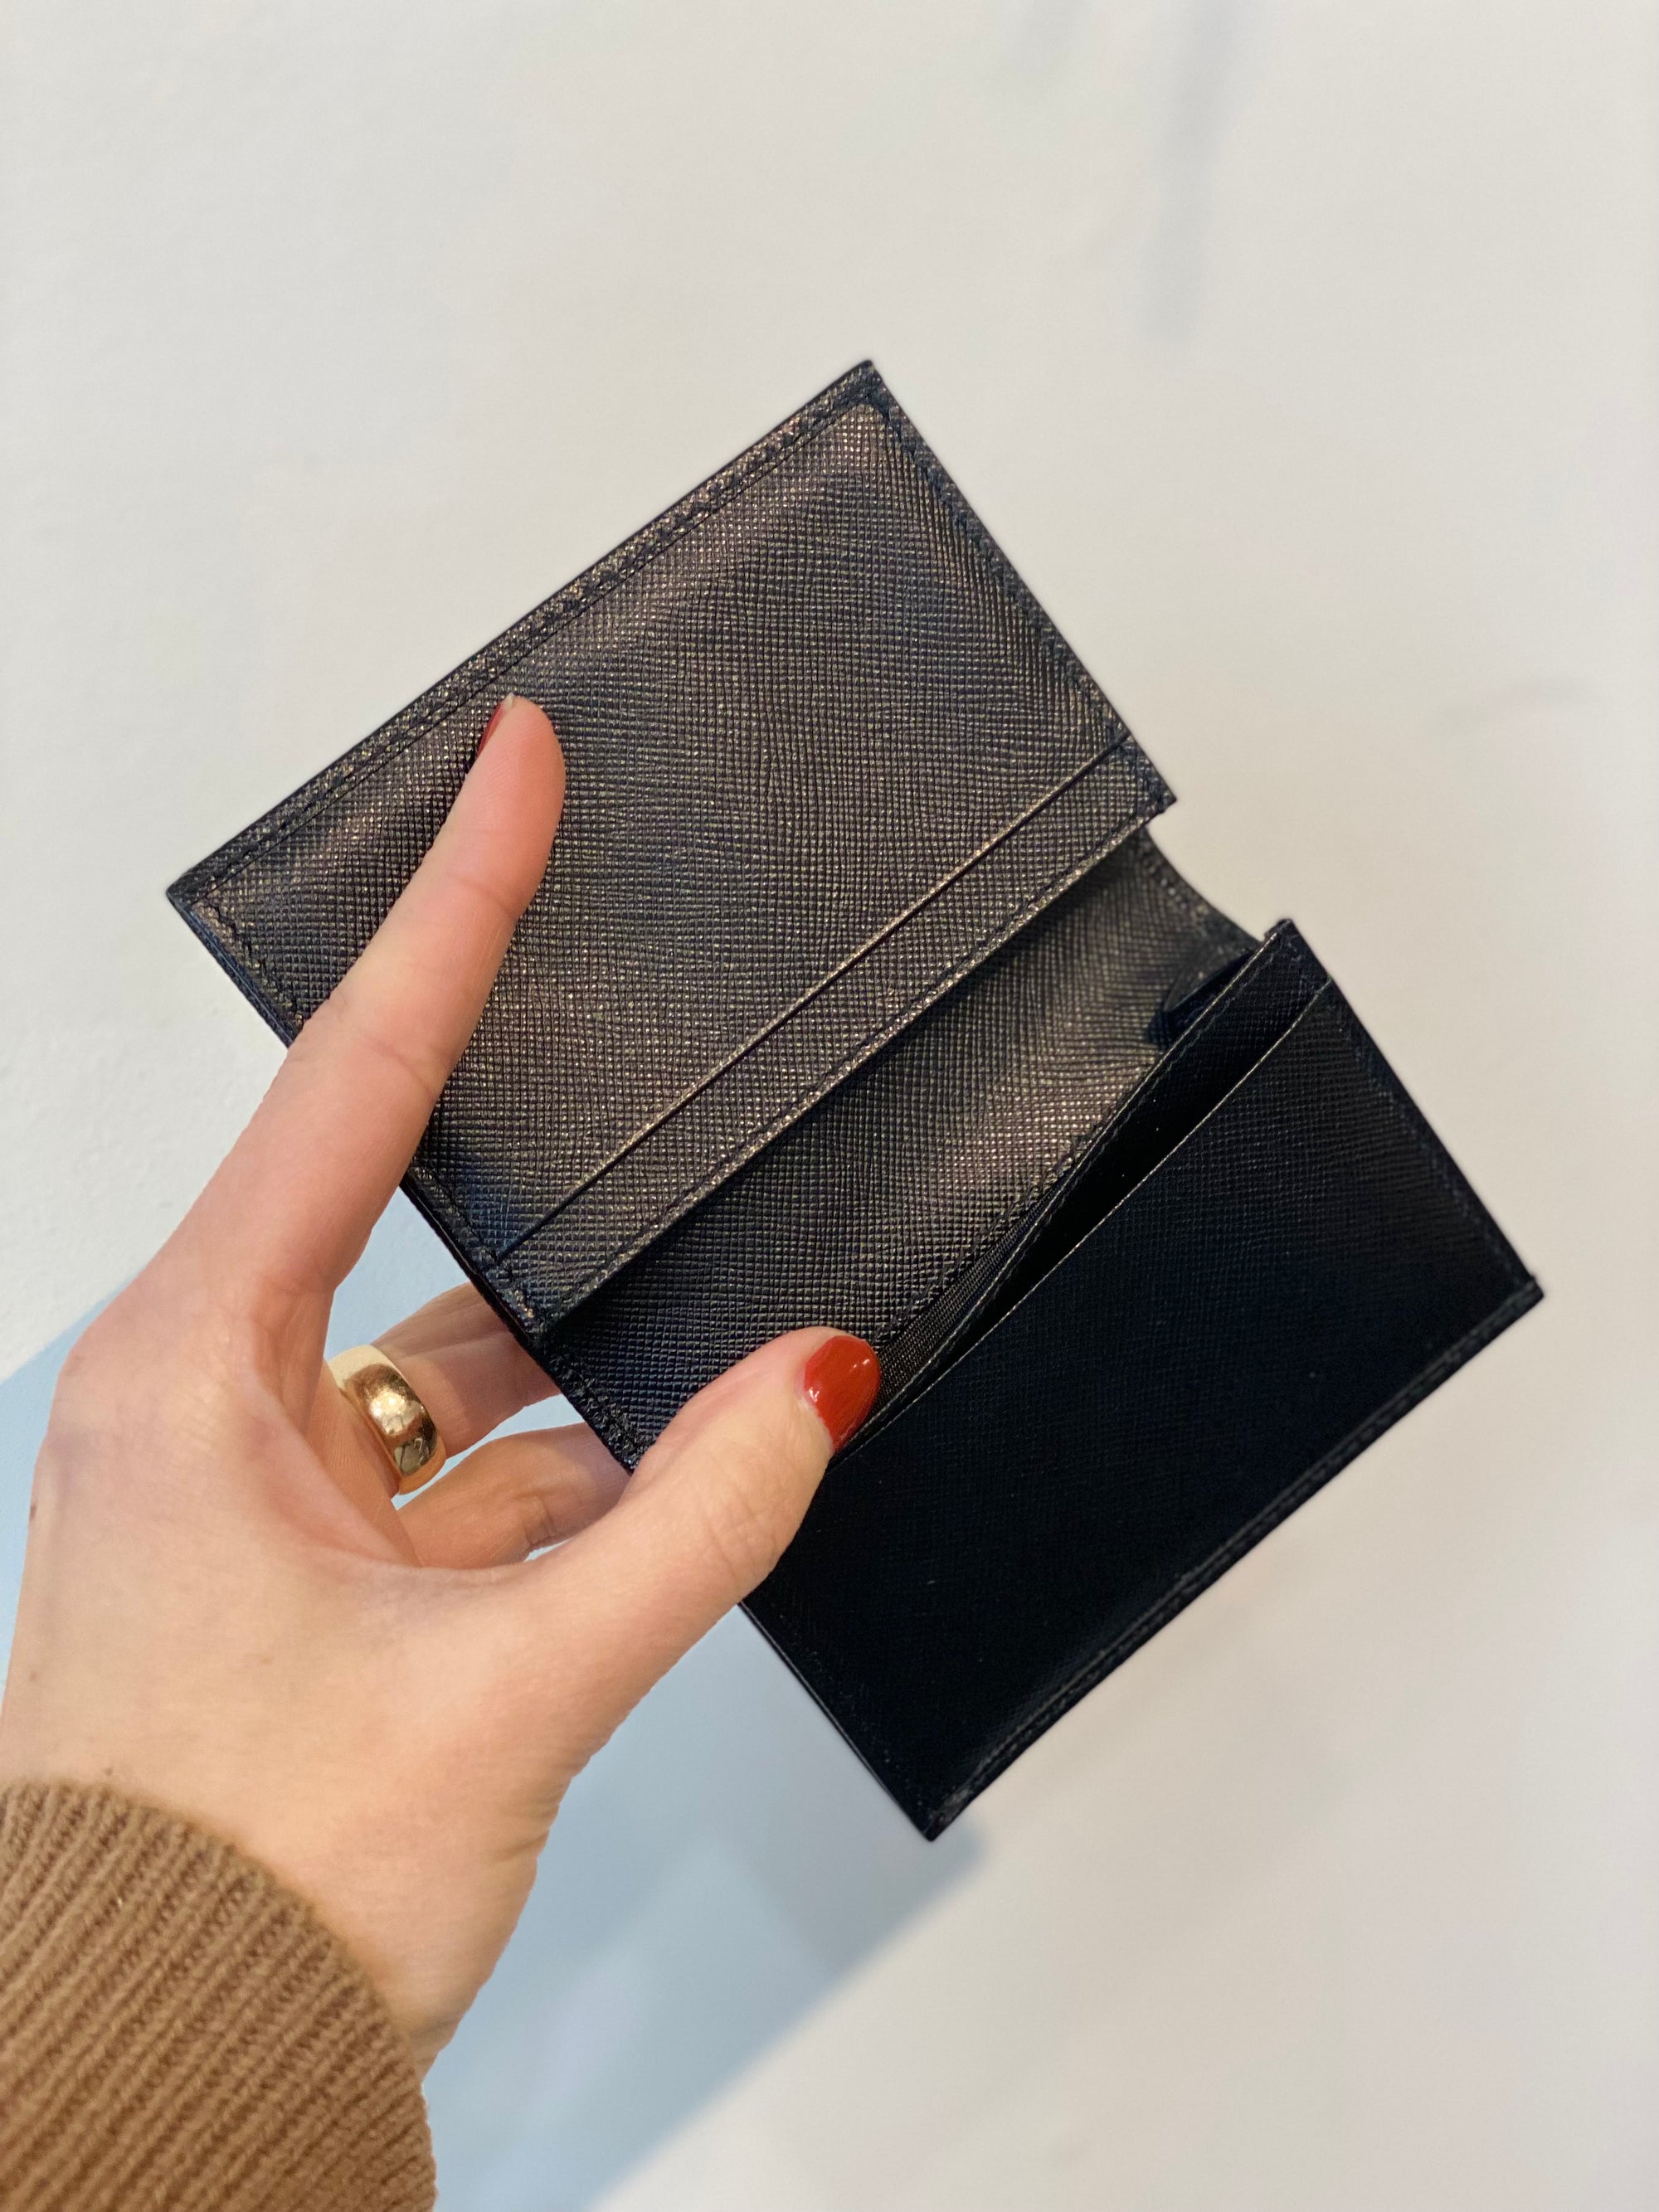 Black Prada Wallet